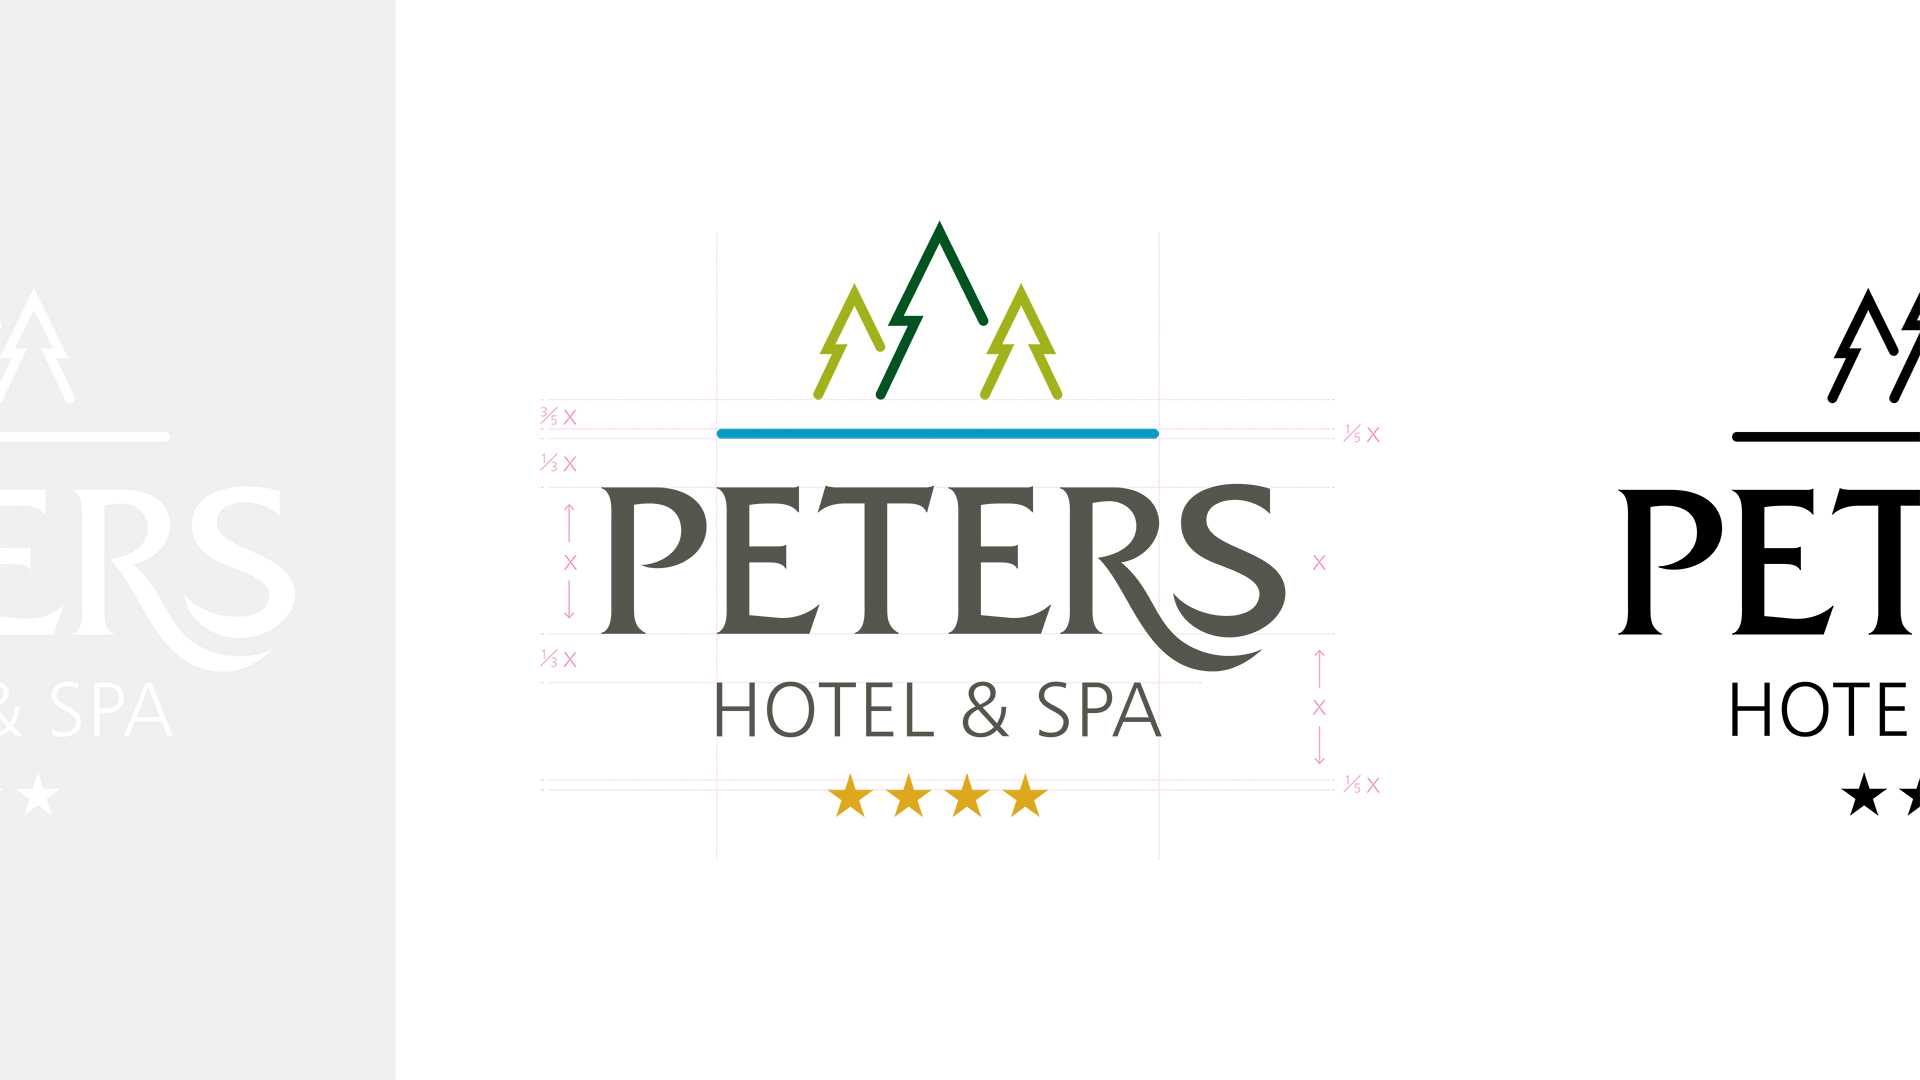 PETERS Hotel & Spa Projektbeispiel